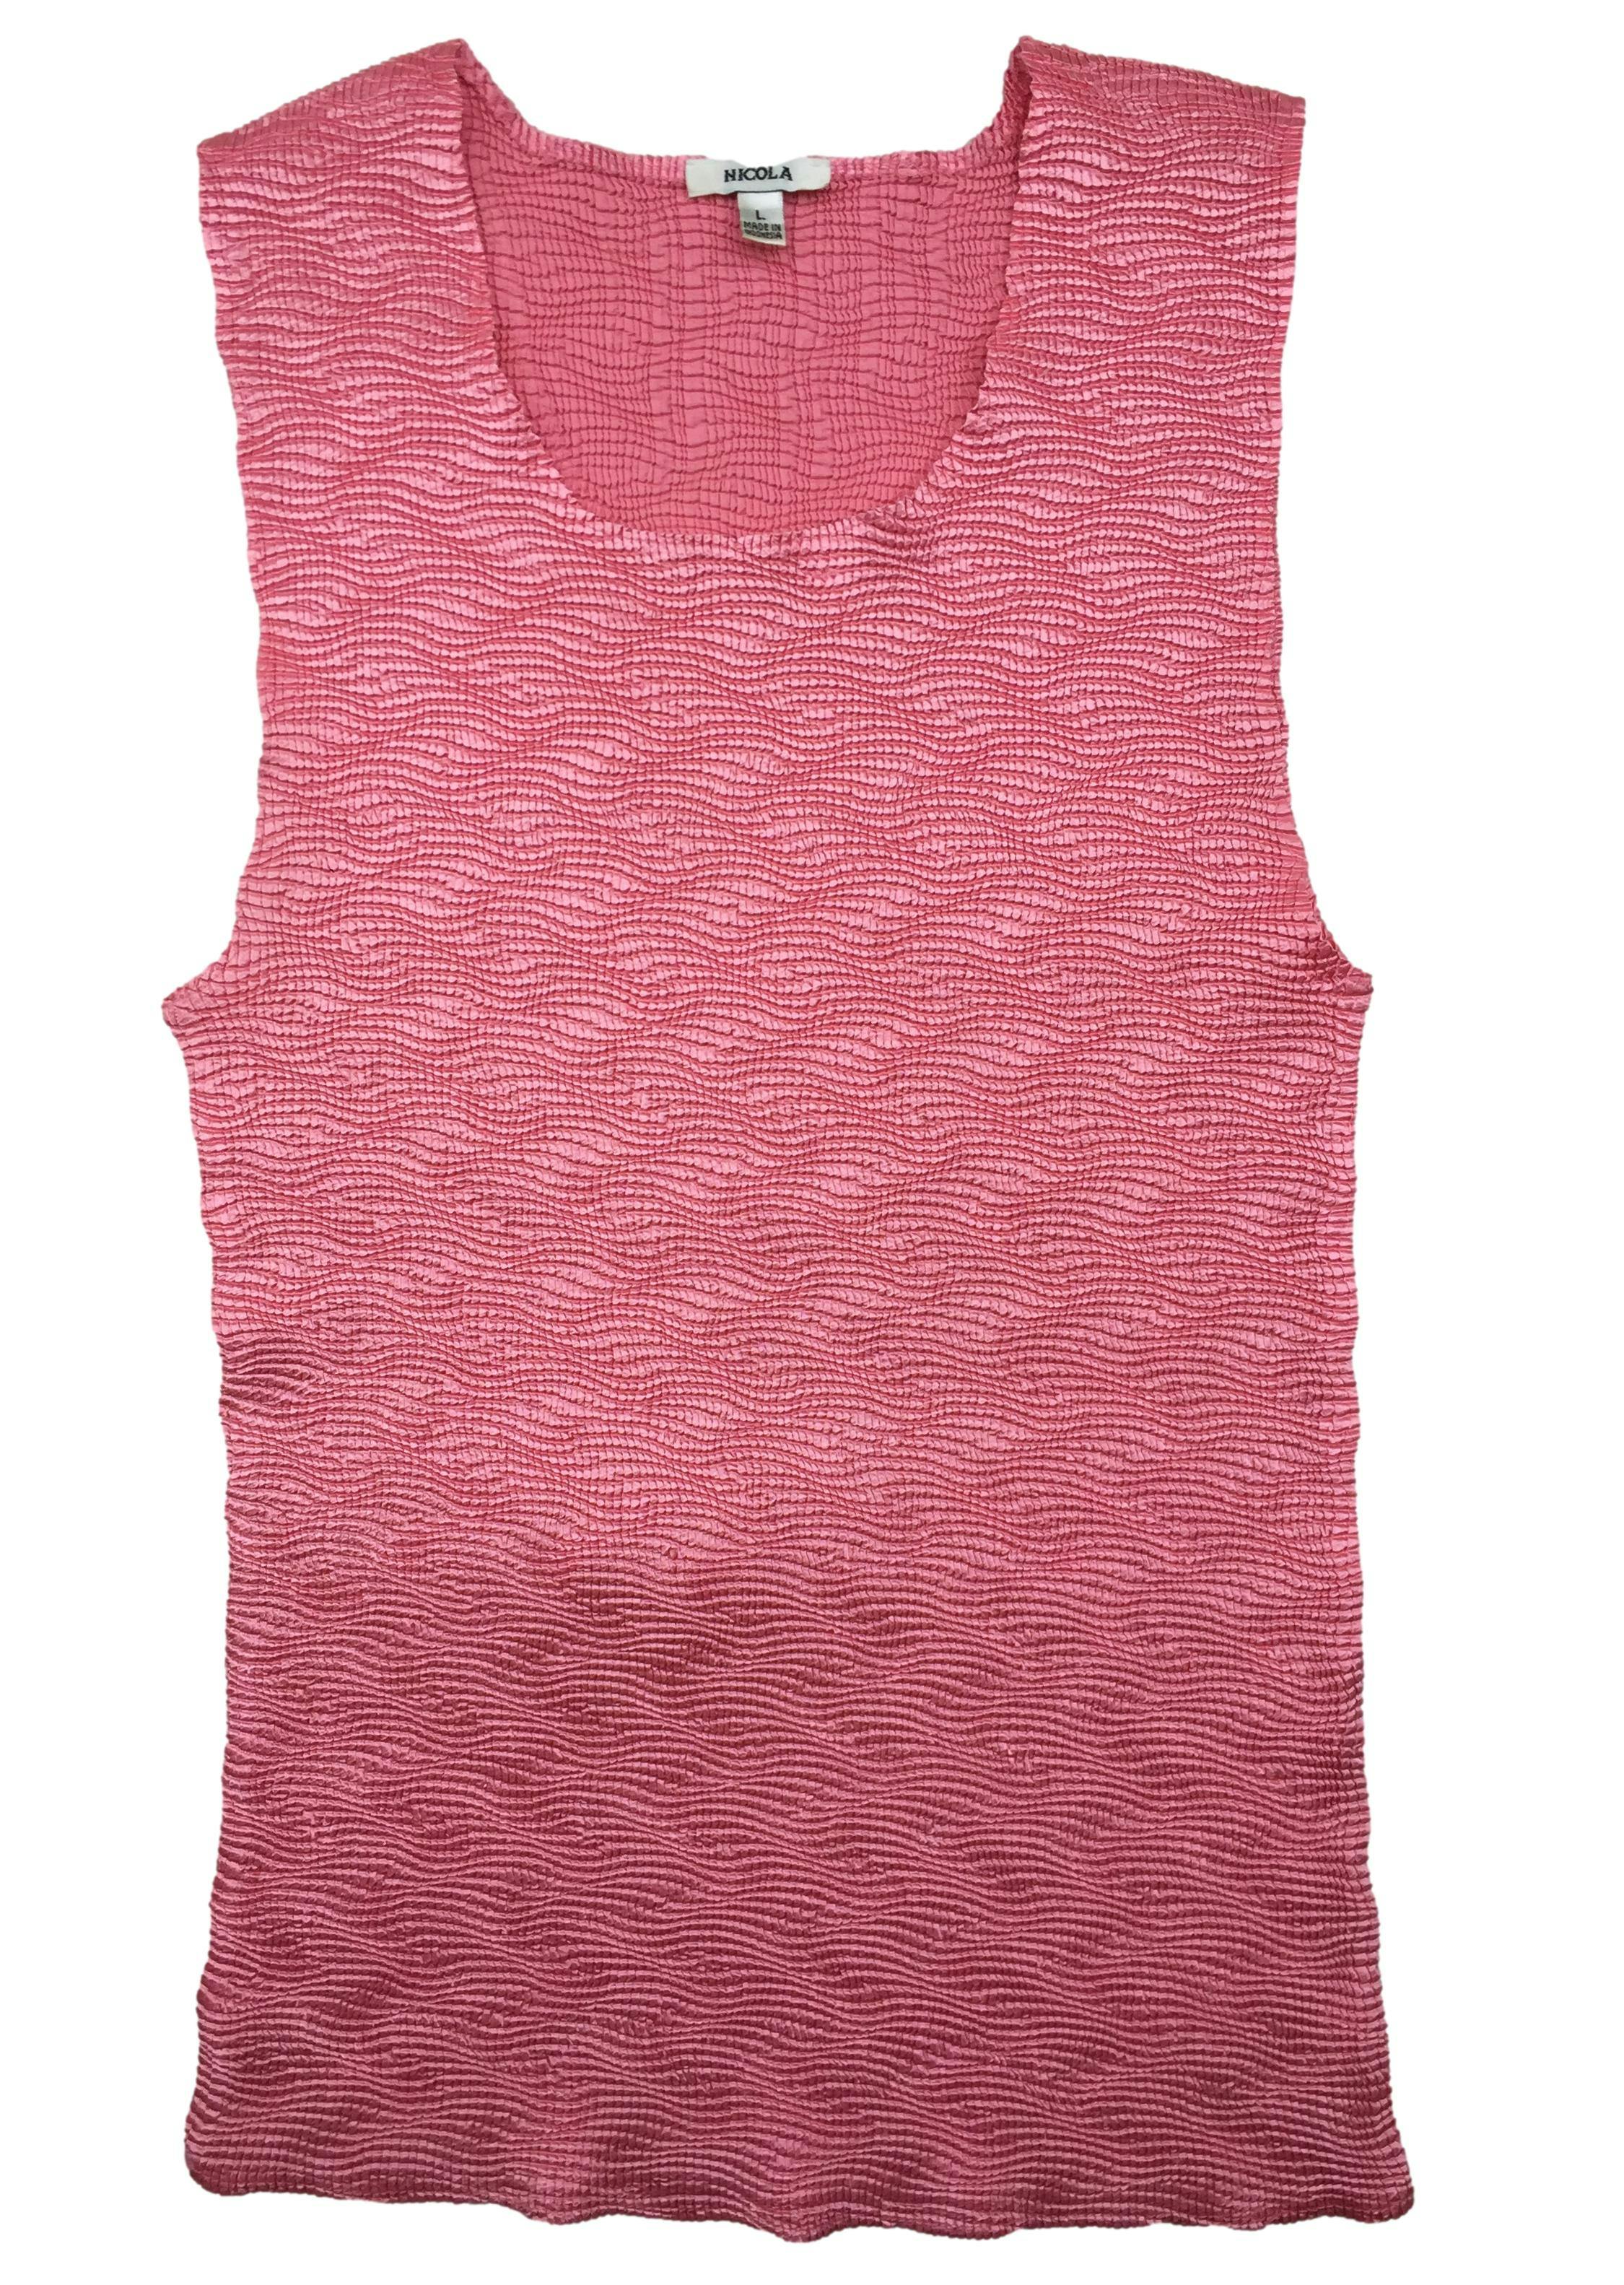 Blusa rosada de tela brillosa, cuello redondo. Busto 72 cm sin estirar, Largo 61 cm.